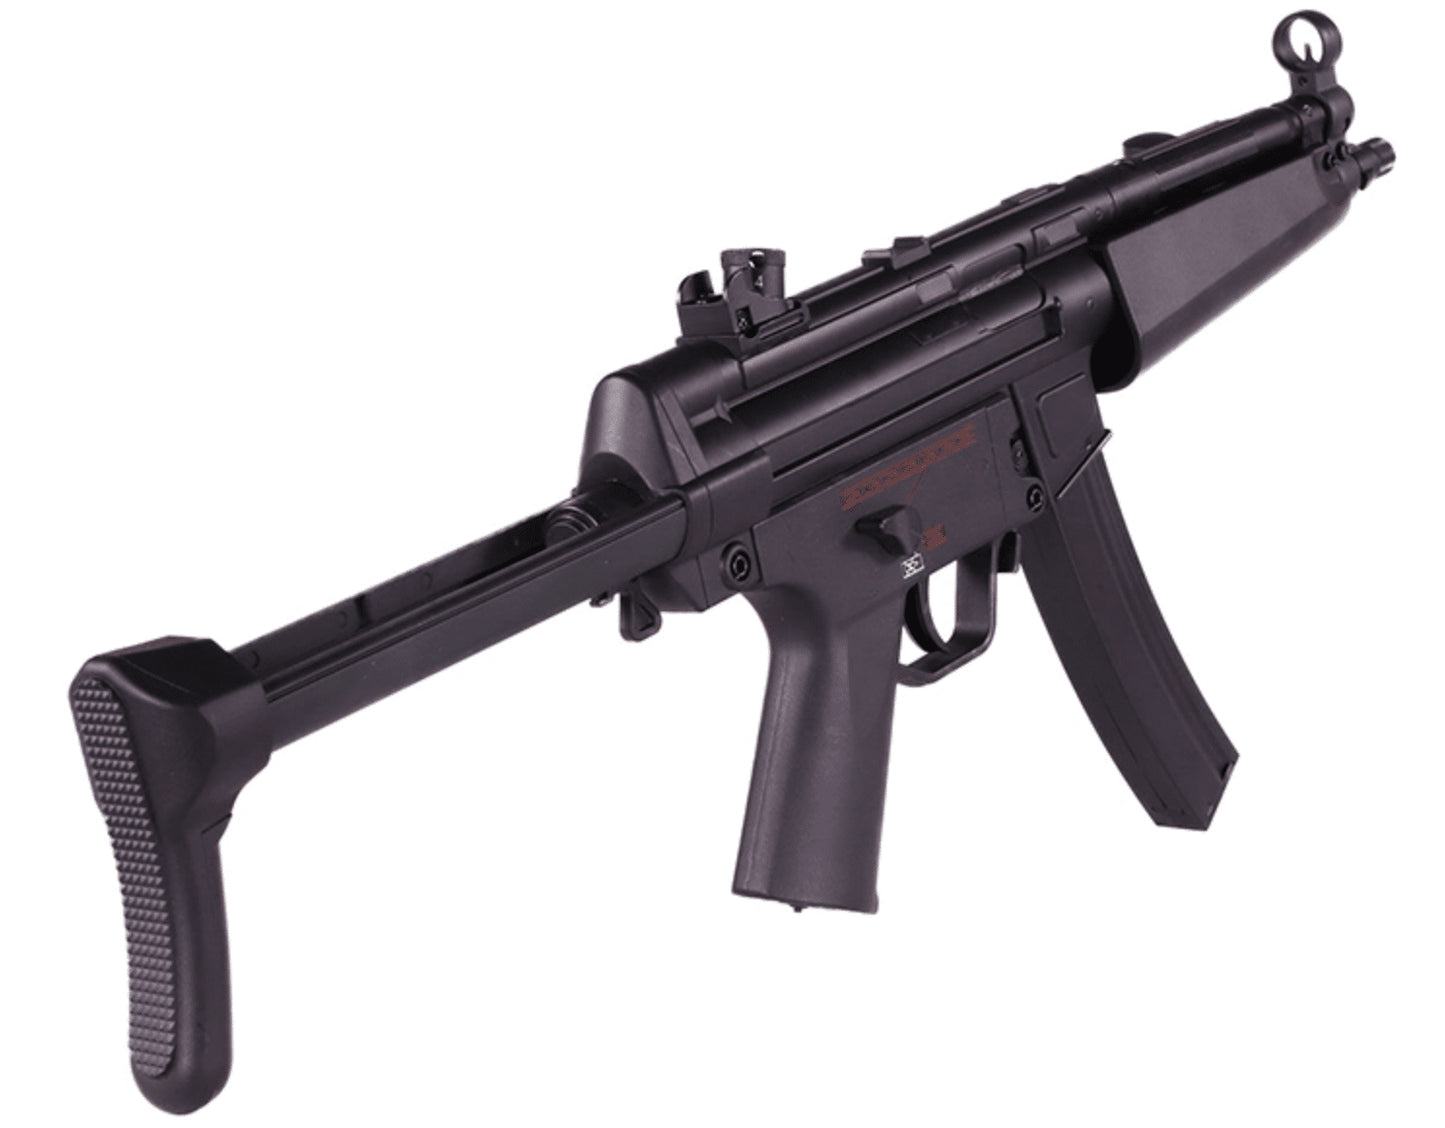 Golden Eagle 6851 MP5A3 - Gel Blaster Guns, Pistols, Handguns, Rifles For Sale